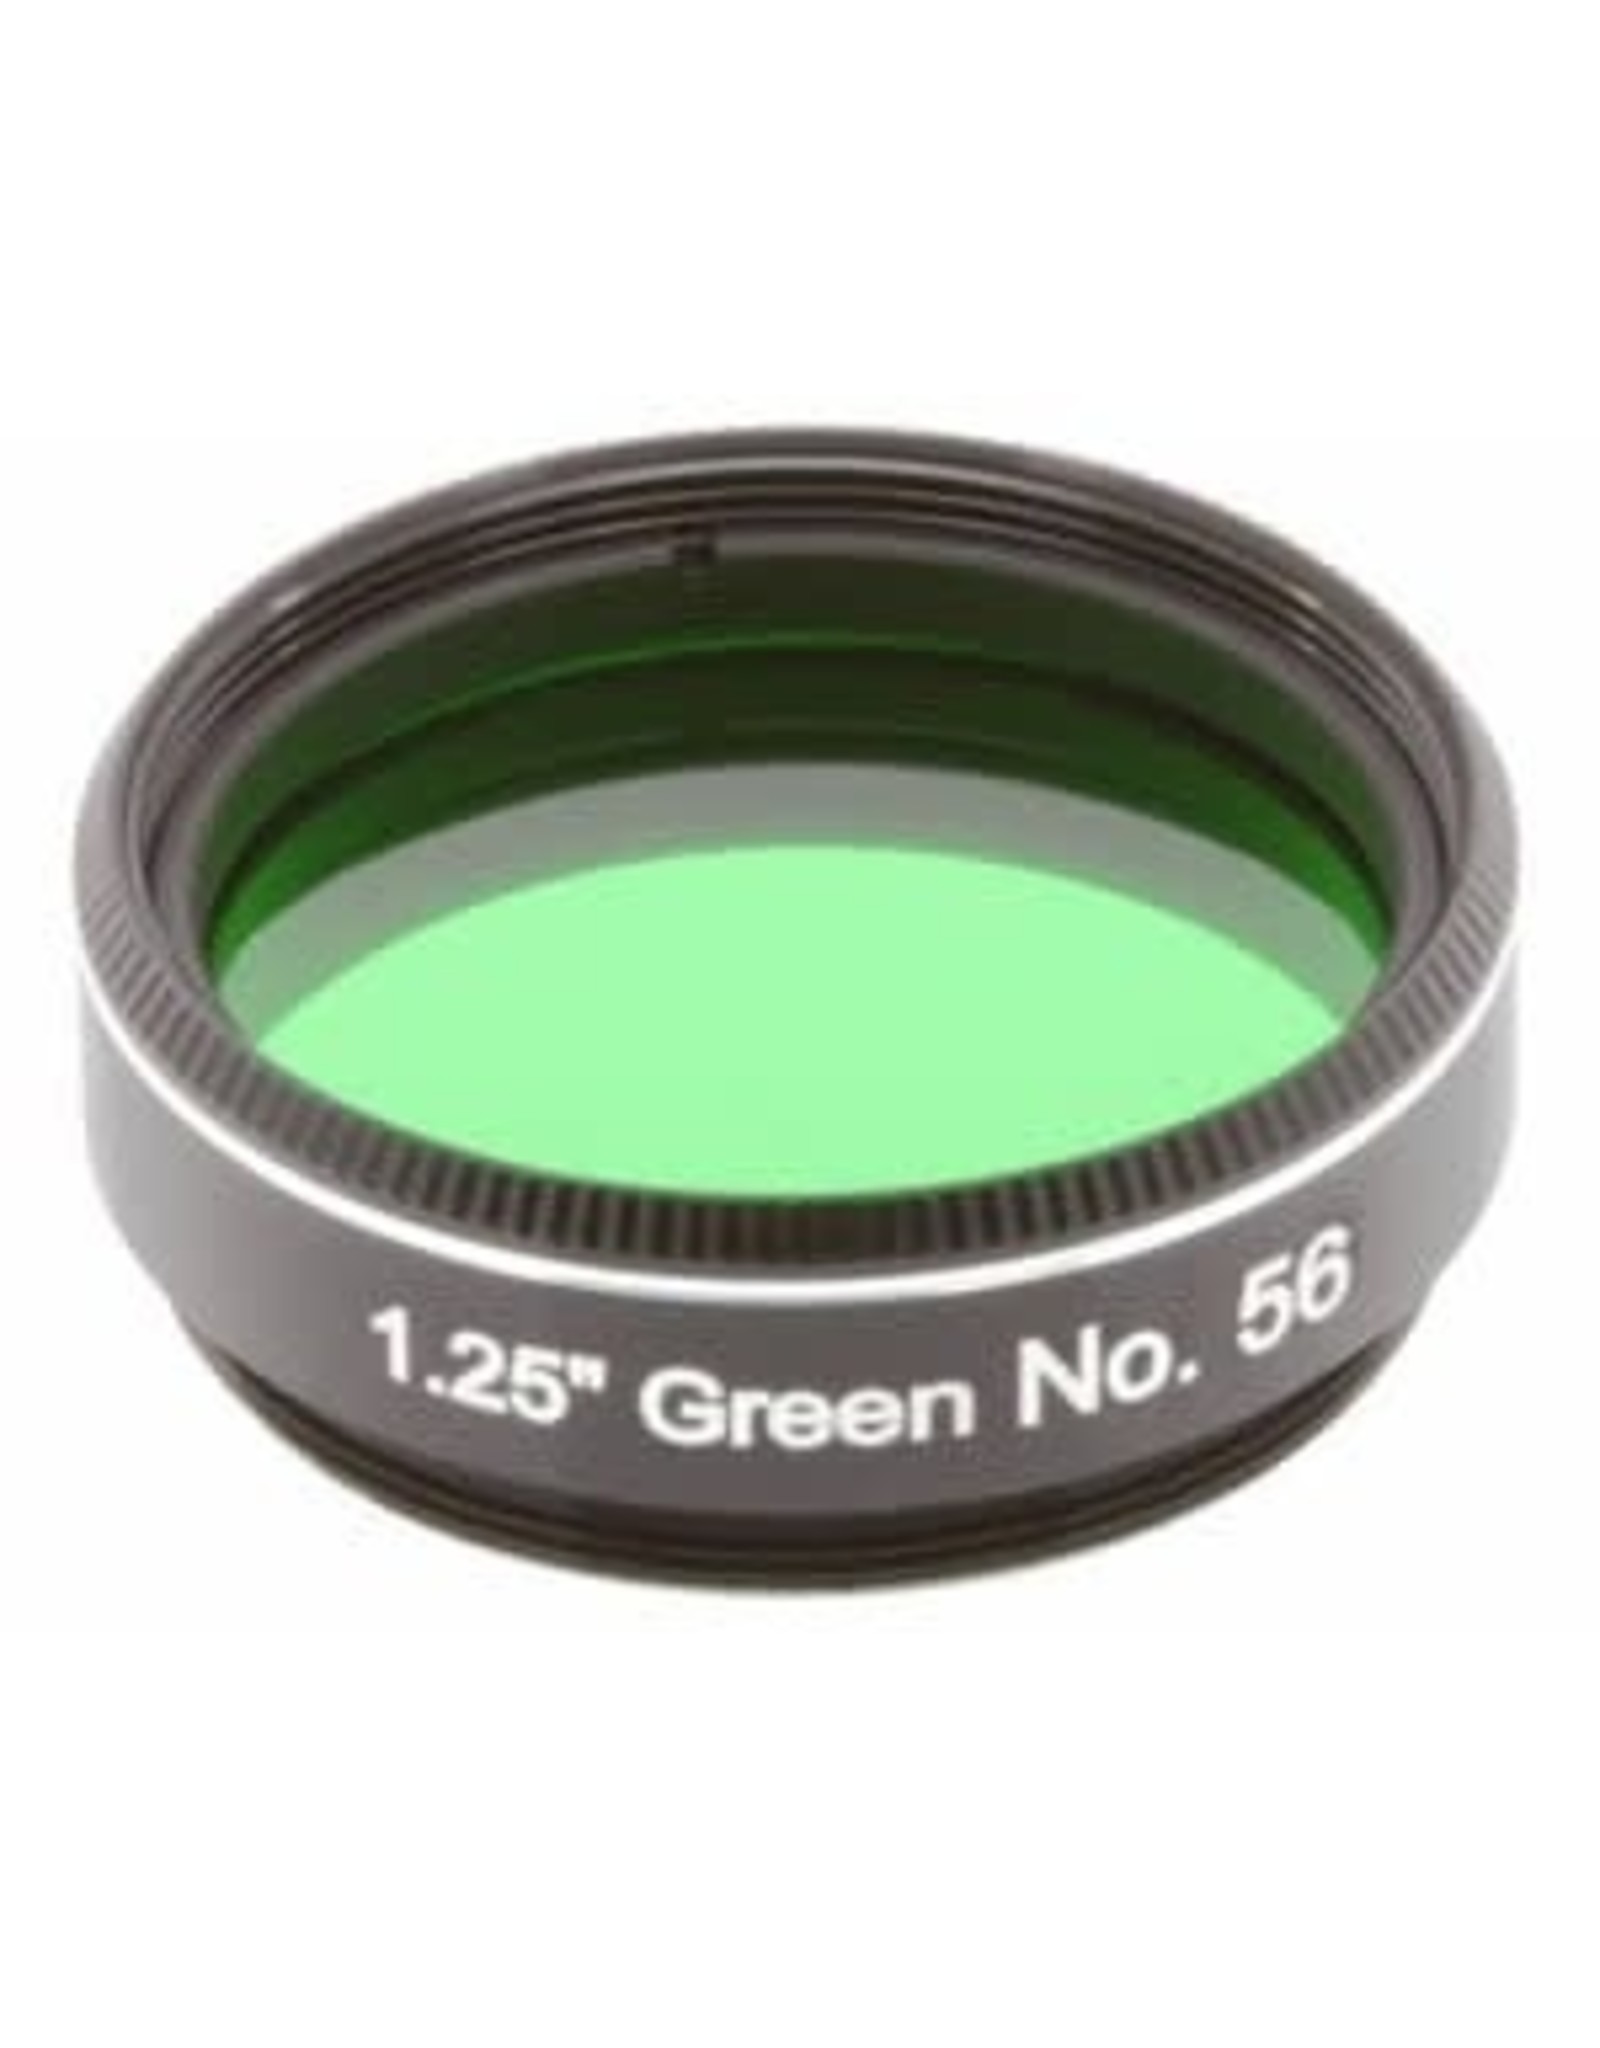 Lumicon Lumicon Green #56 1.25" Filter